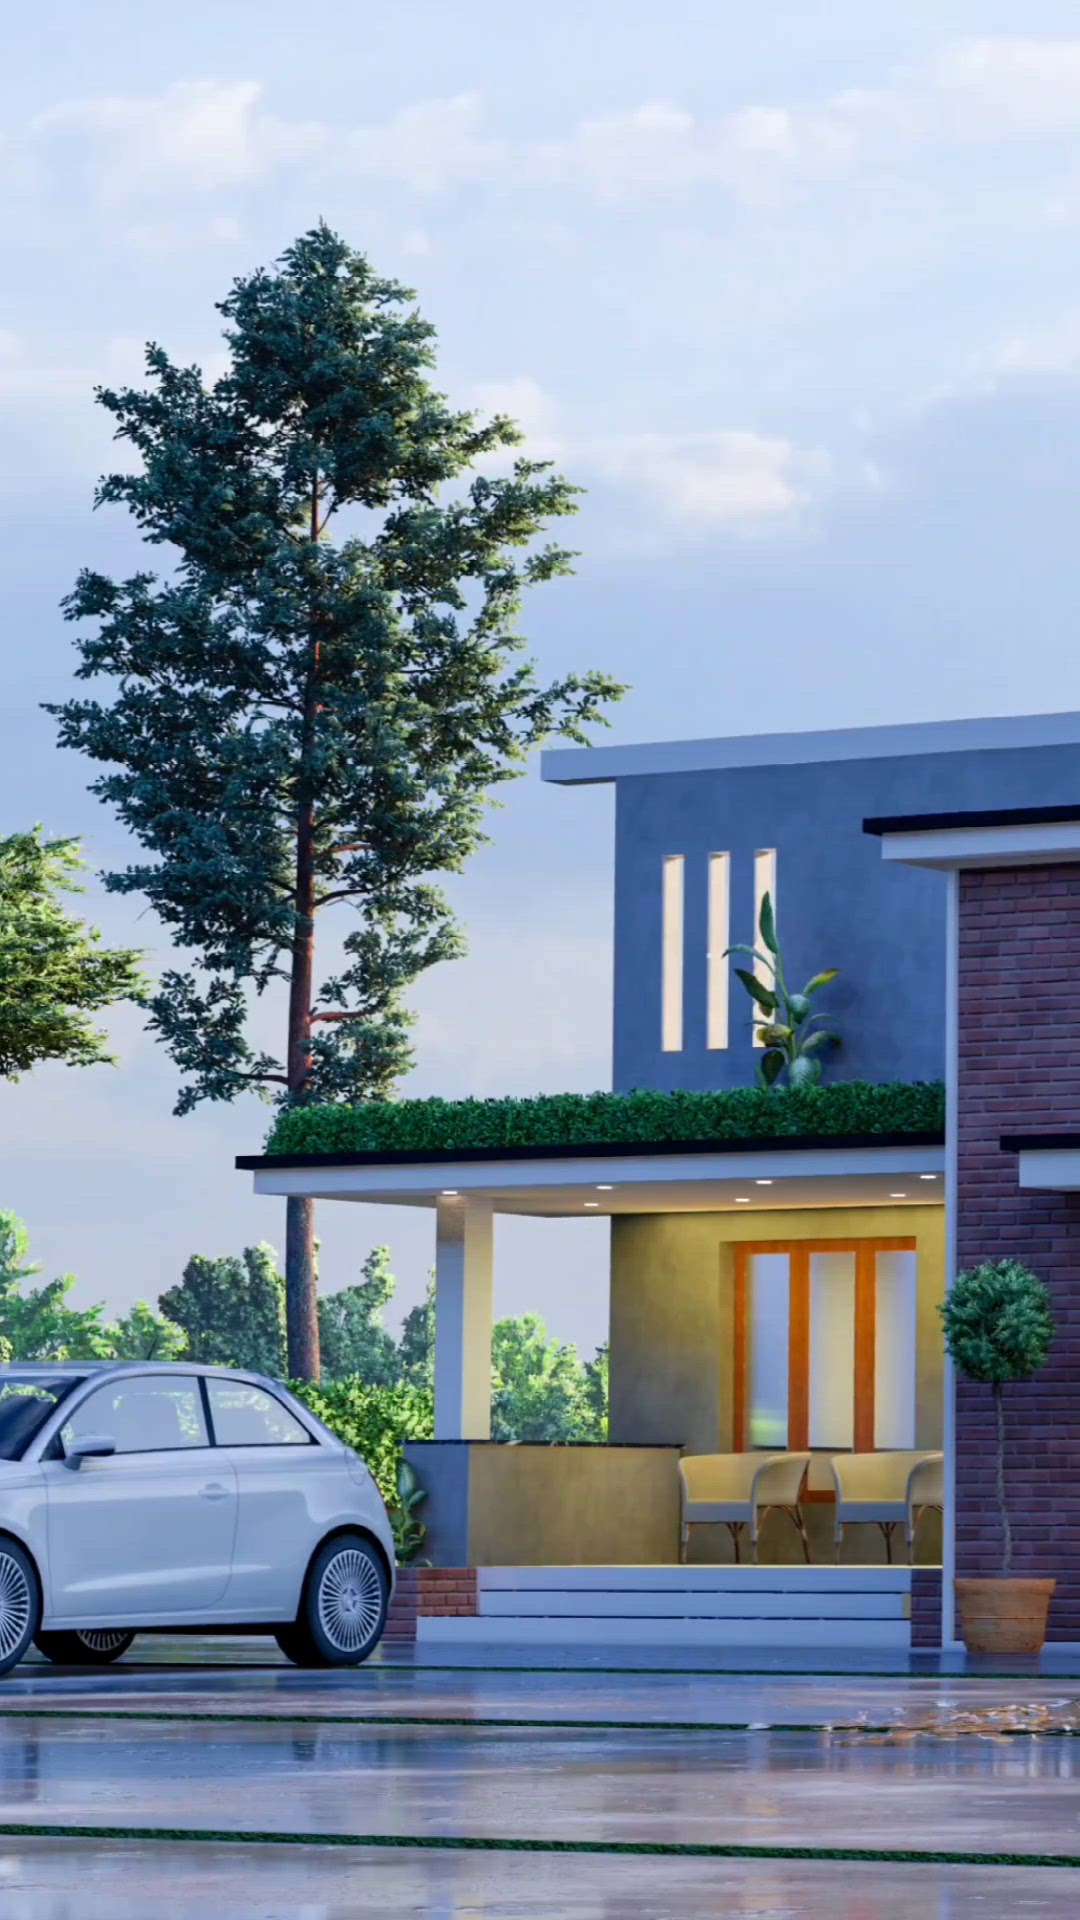 Area 1100 sqft 
#KeralaStyleHouse #keralaplanners #veed #ElevationHome #homedesigne